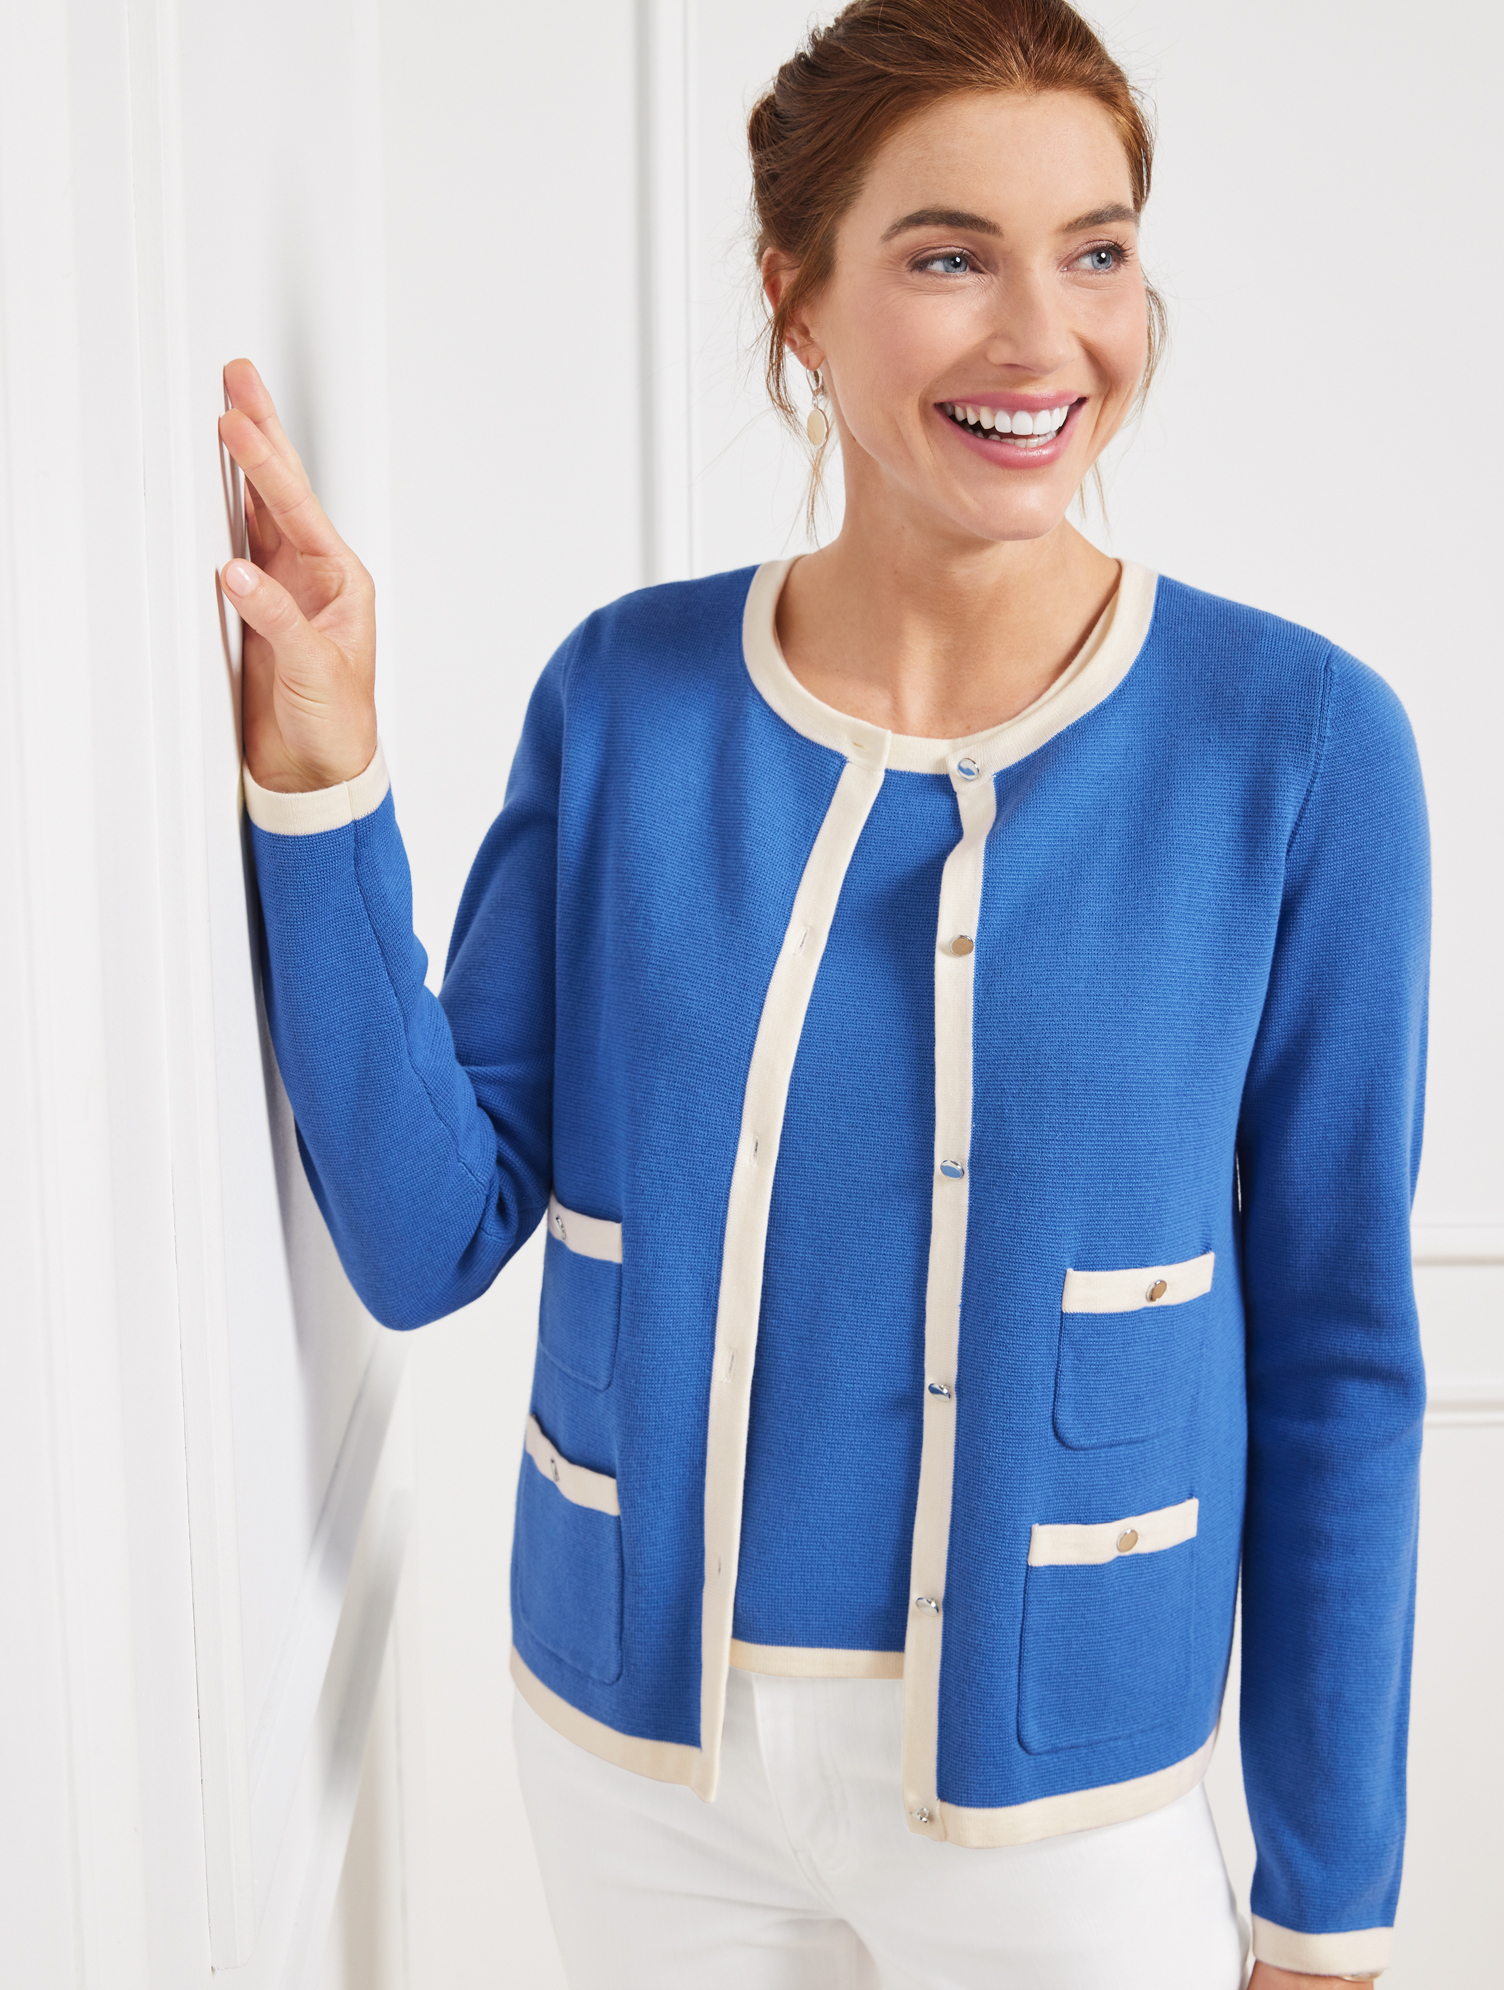 Talbots Plus Size - Grace Cardigan Sweater - Tipped - Capri Blue/ivory - 2x  In Capri Blue,ivory